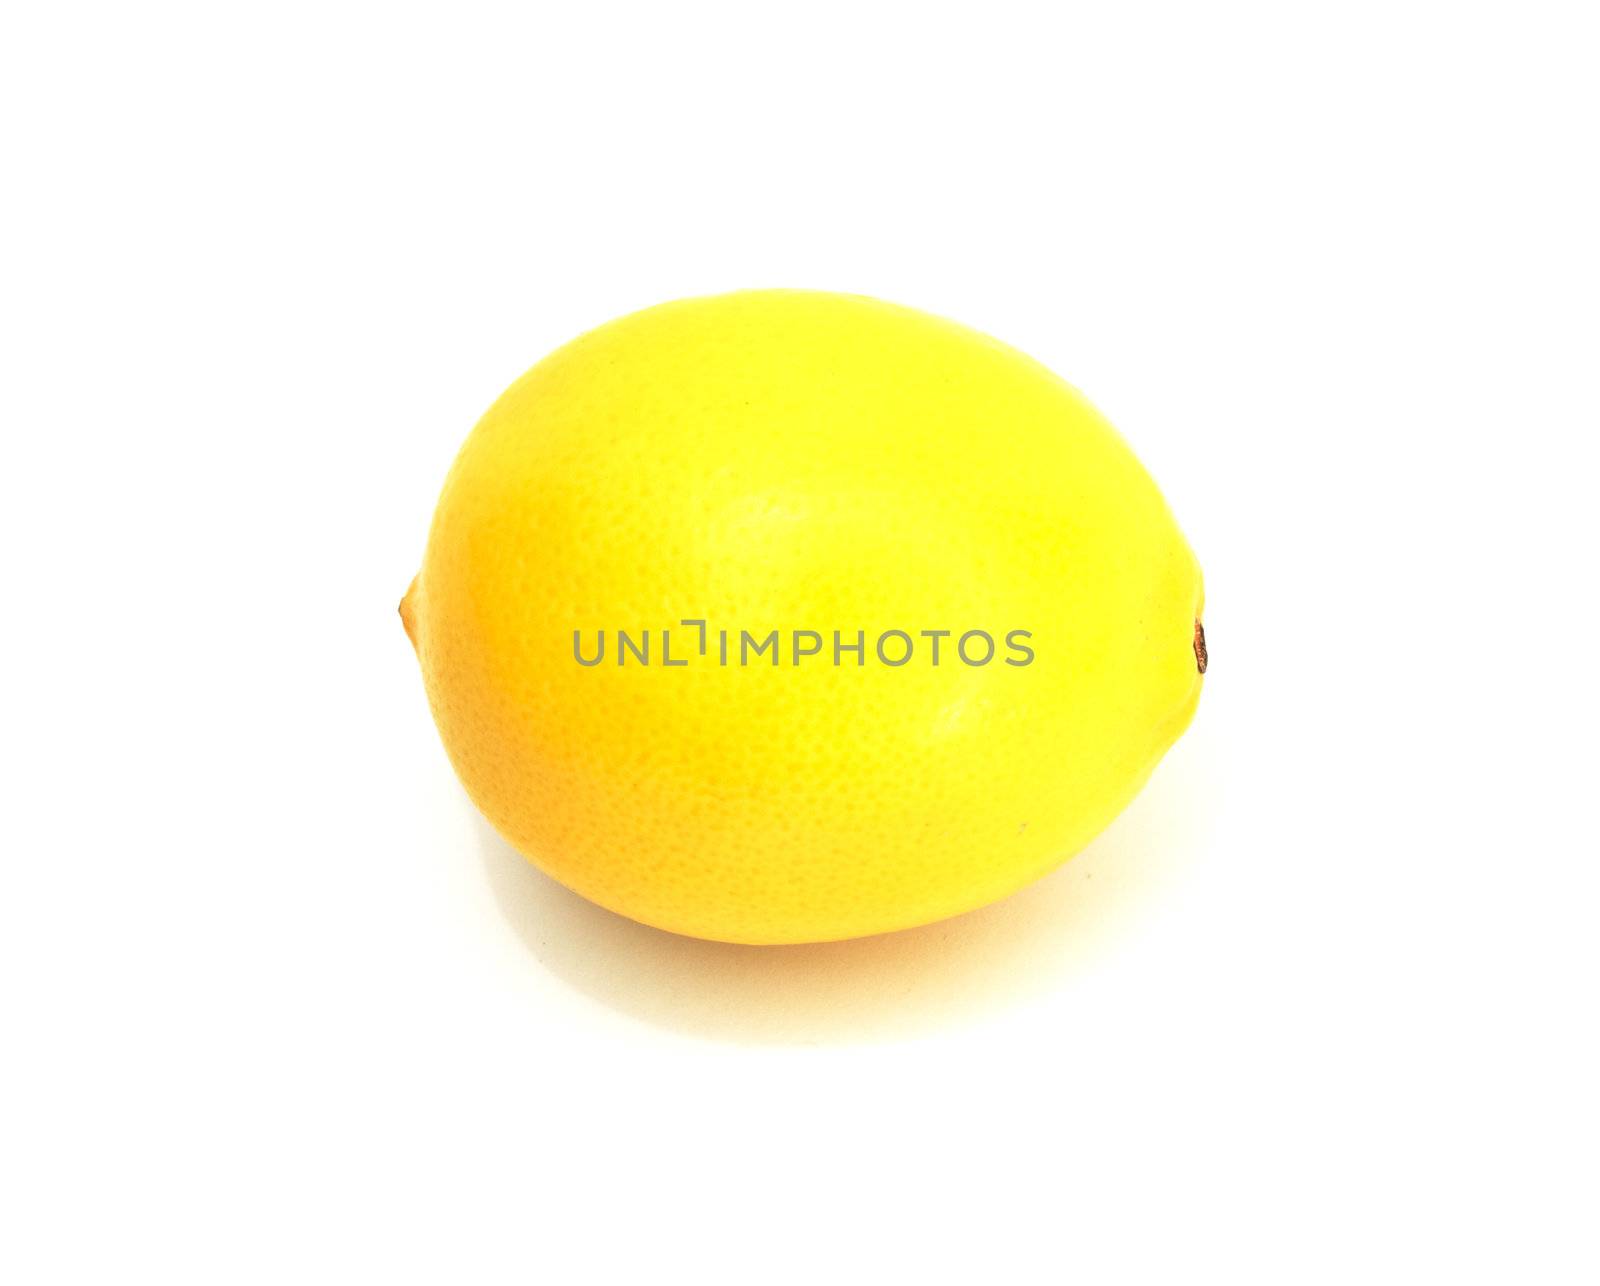 Lemon on a white background 